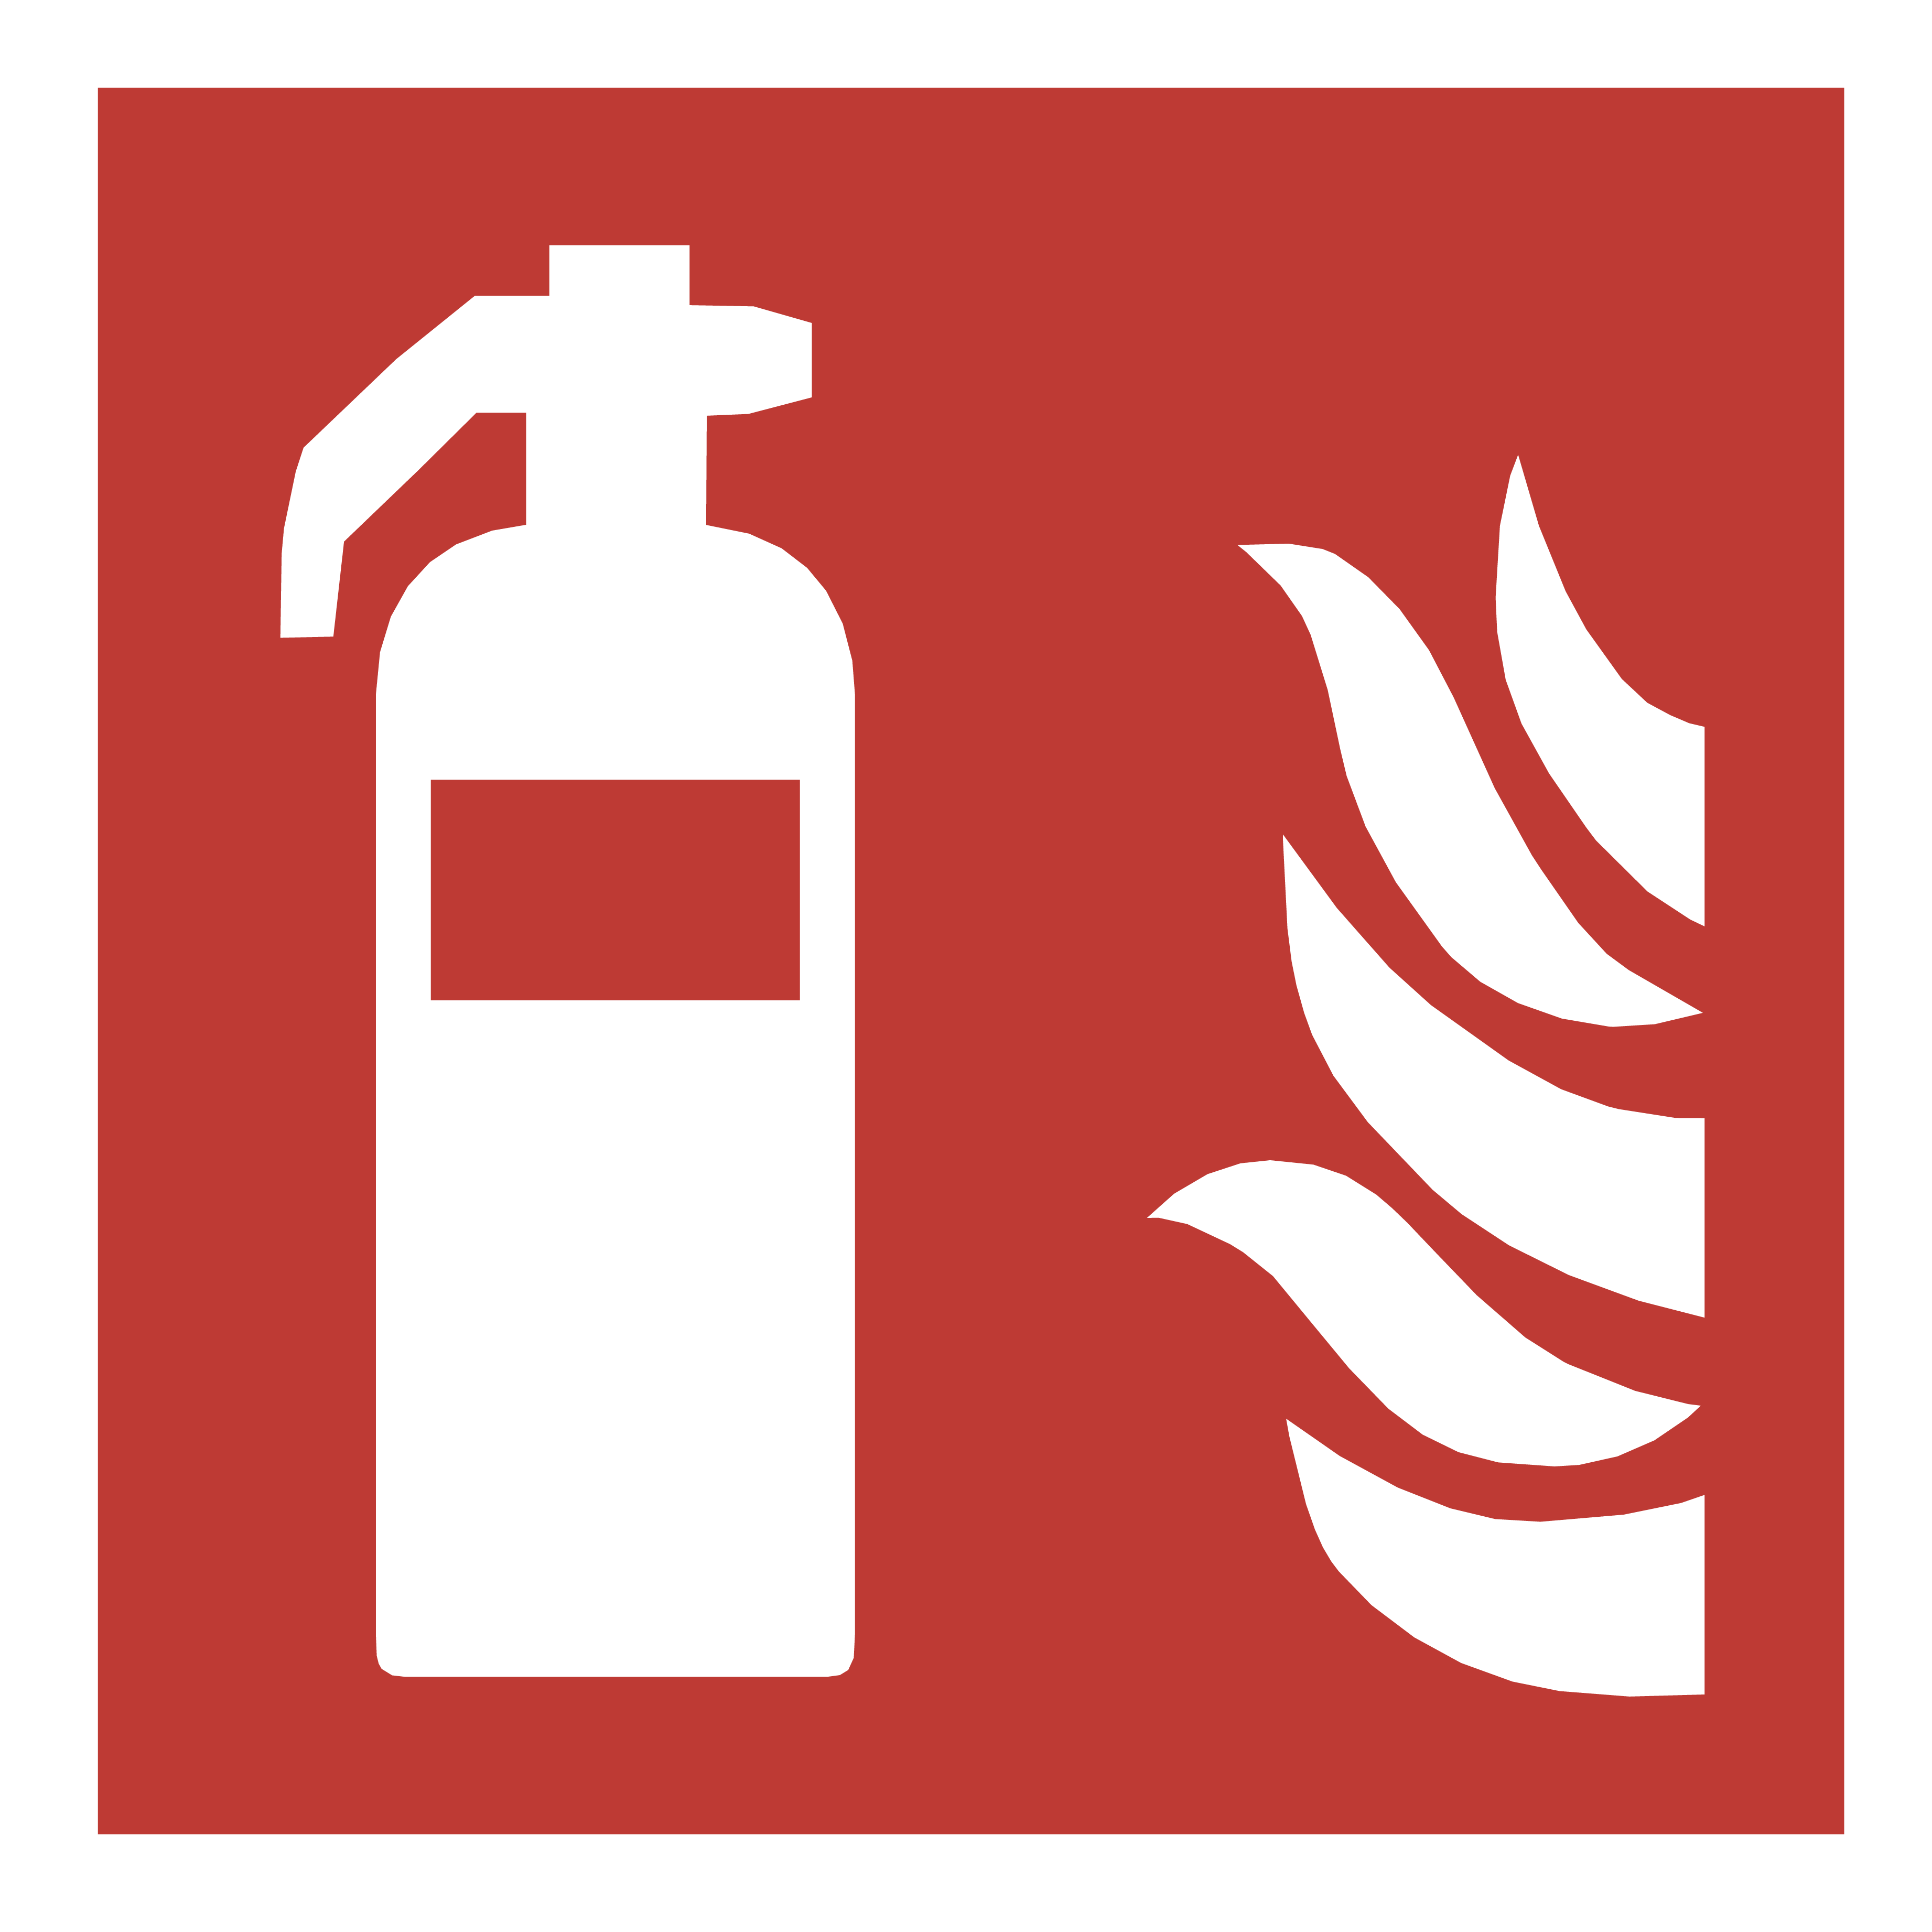 15x 5cm Brandblus Stickers | Brandblusser | Brandbeveiliging | Brandblusapparaat | ISO 7010 F001